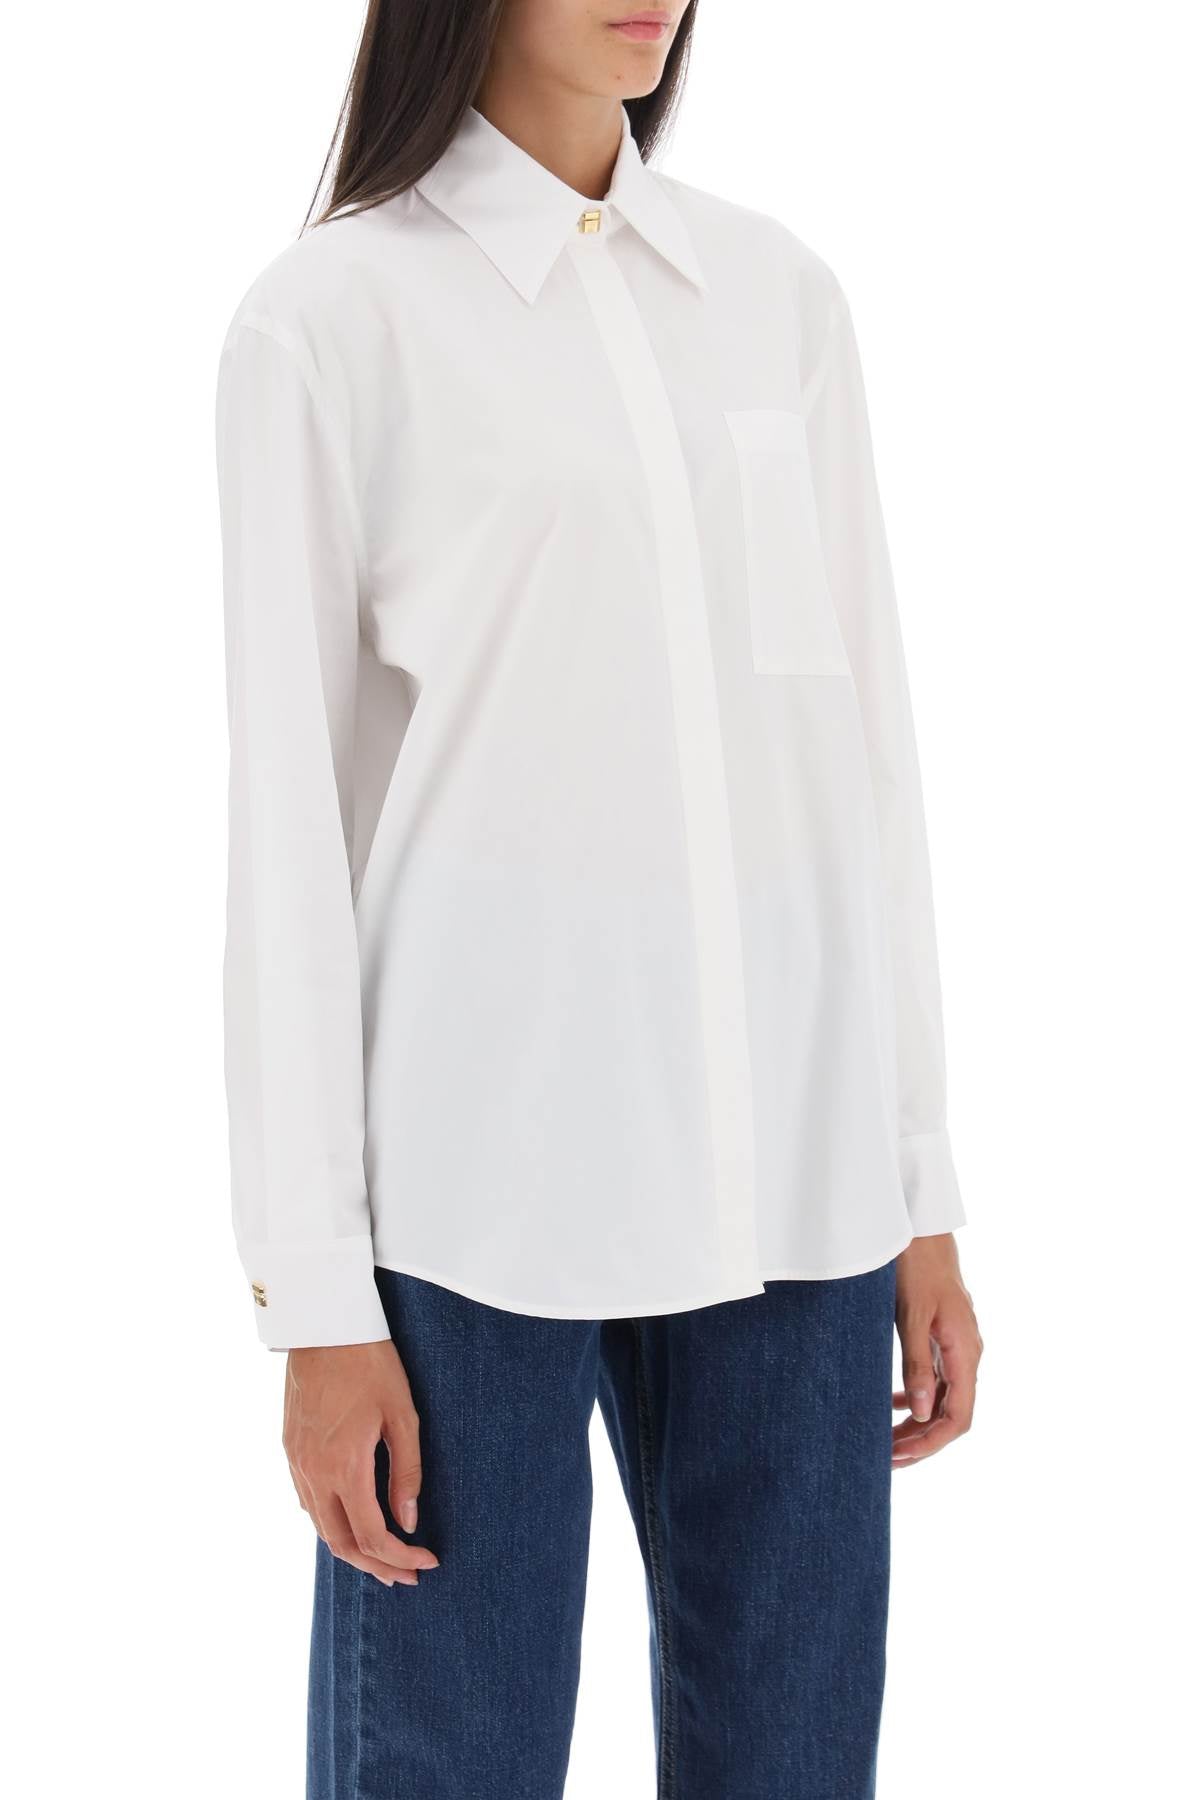 Mvp wardrobe 'matteotti' cotton shirt-1